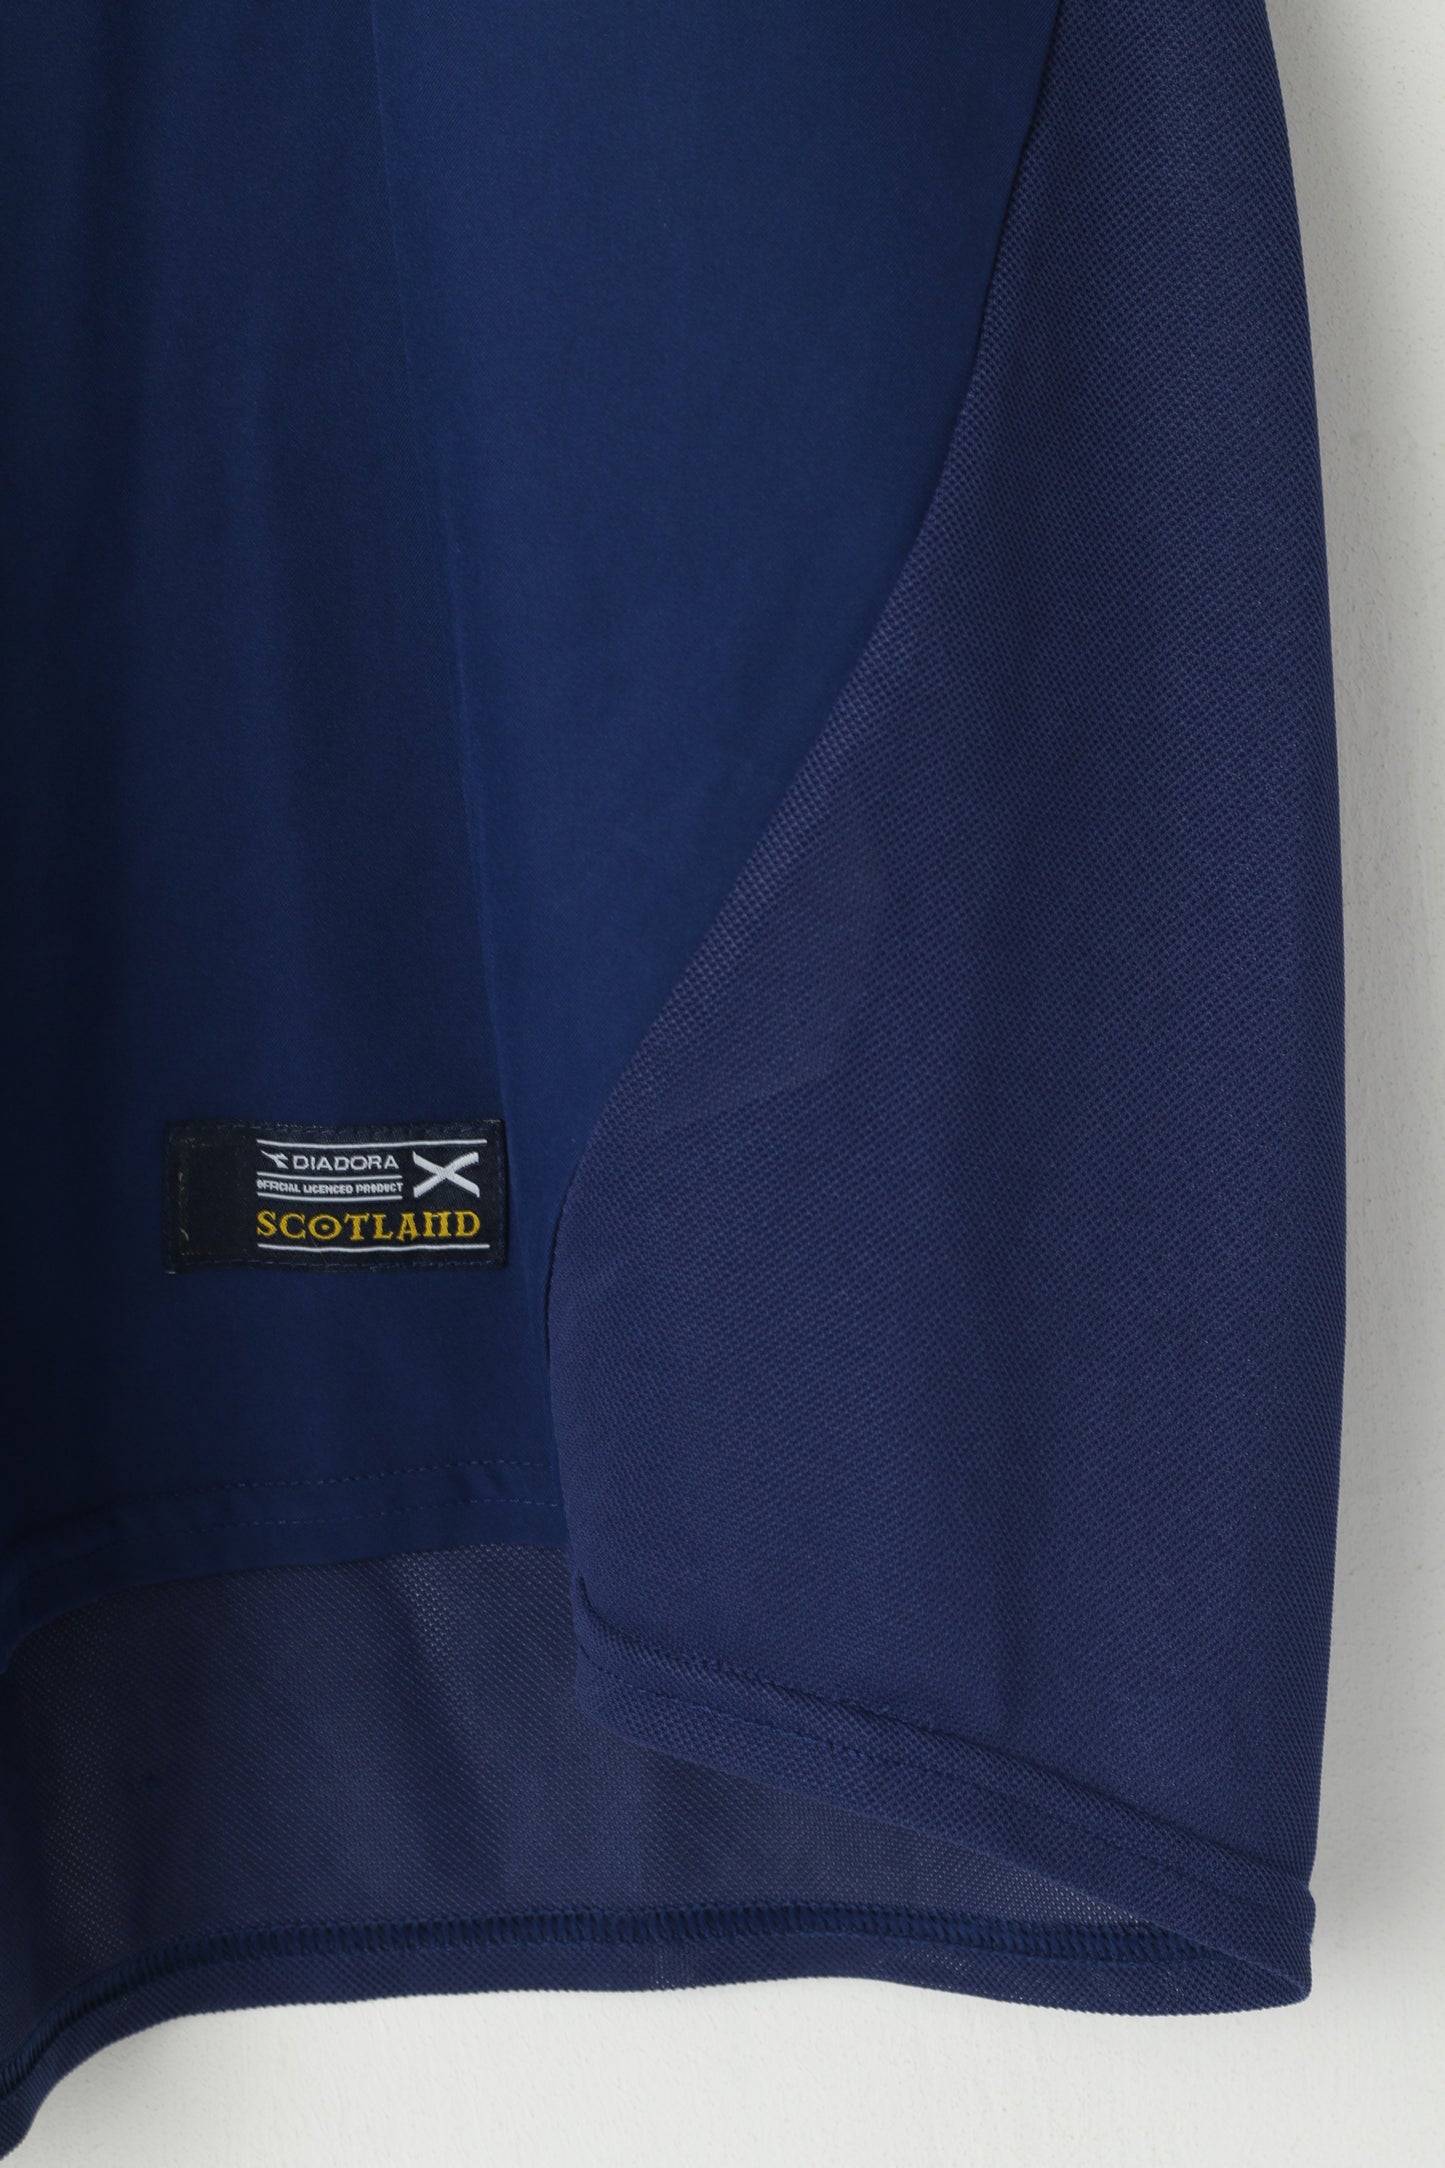 Diadora Men S Shirt Navy Crew Neck Scotland Football Jersey Top